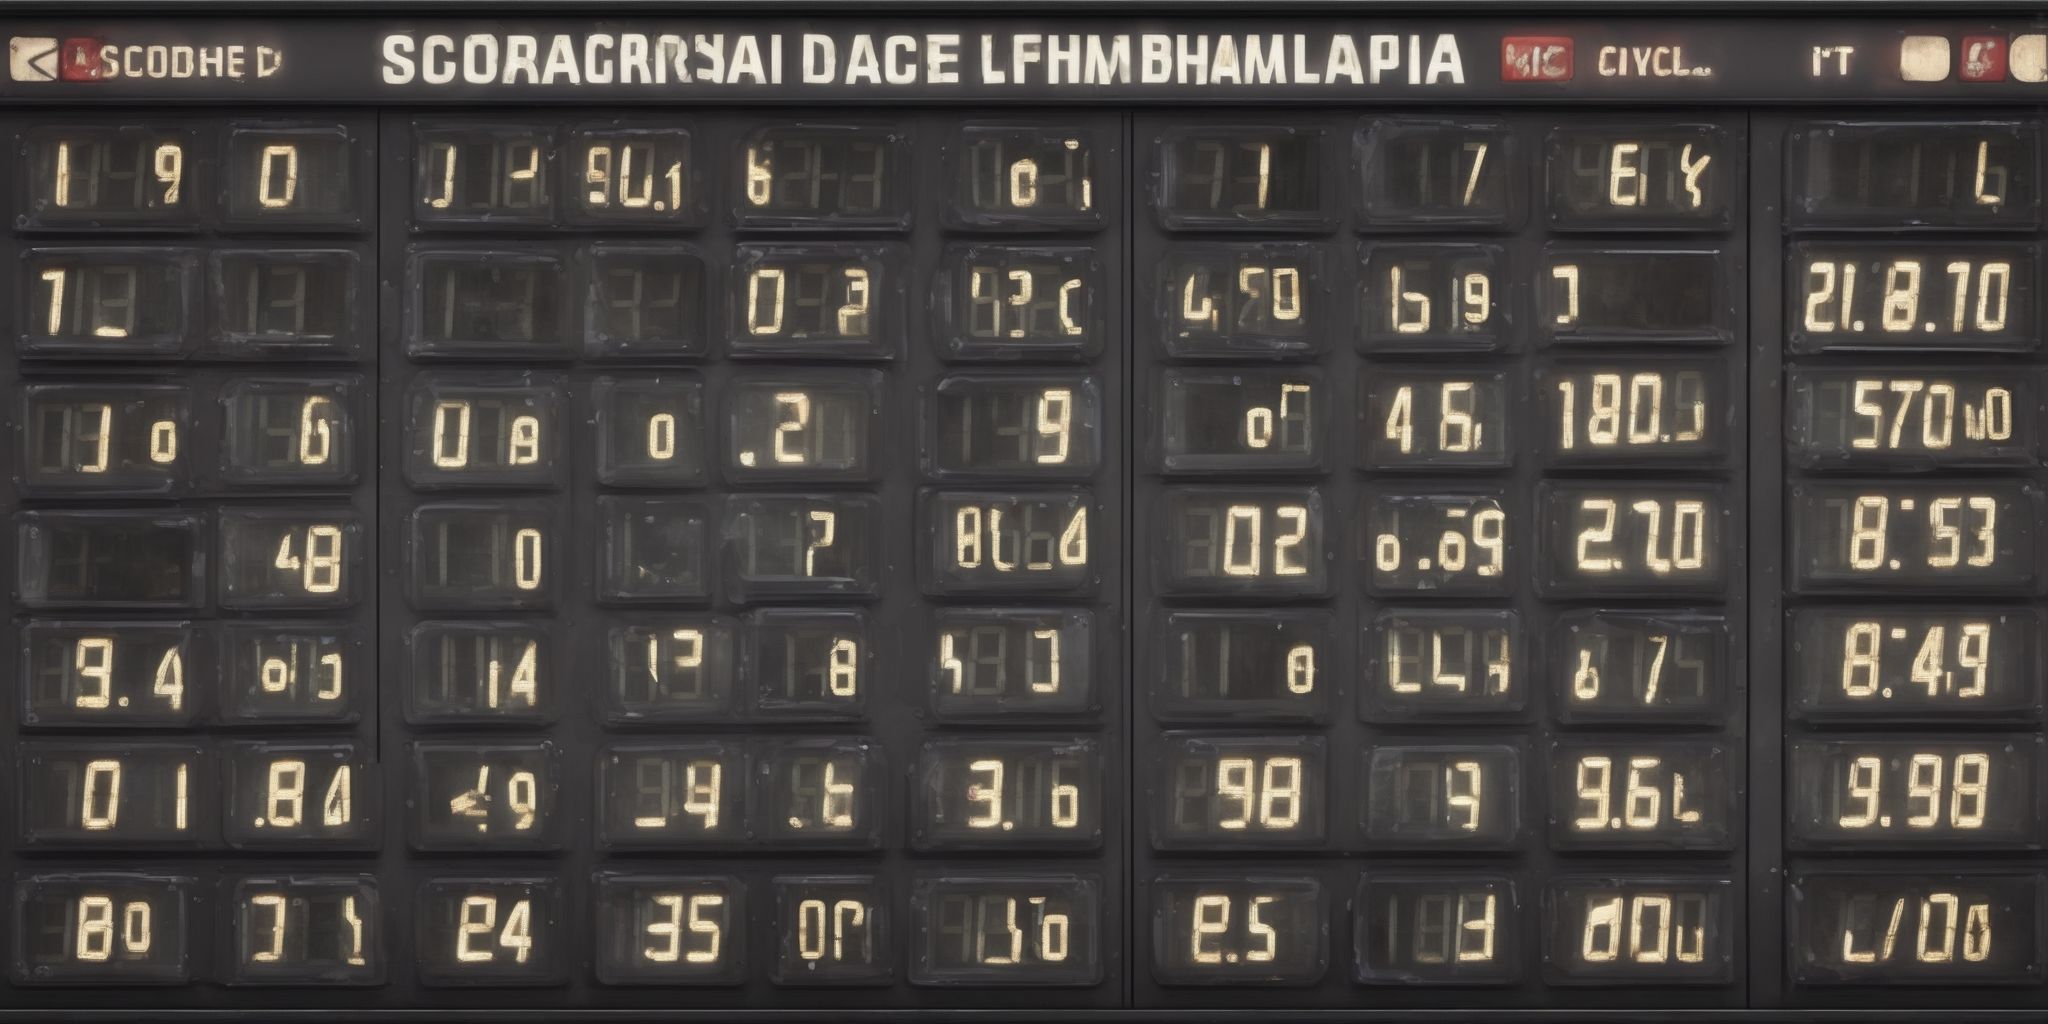 Scoreboard  in realistic, photographic style